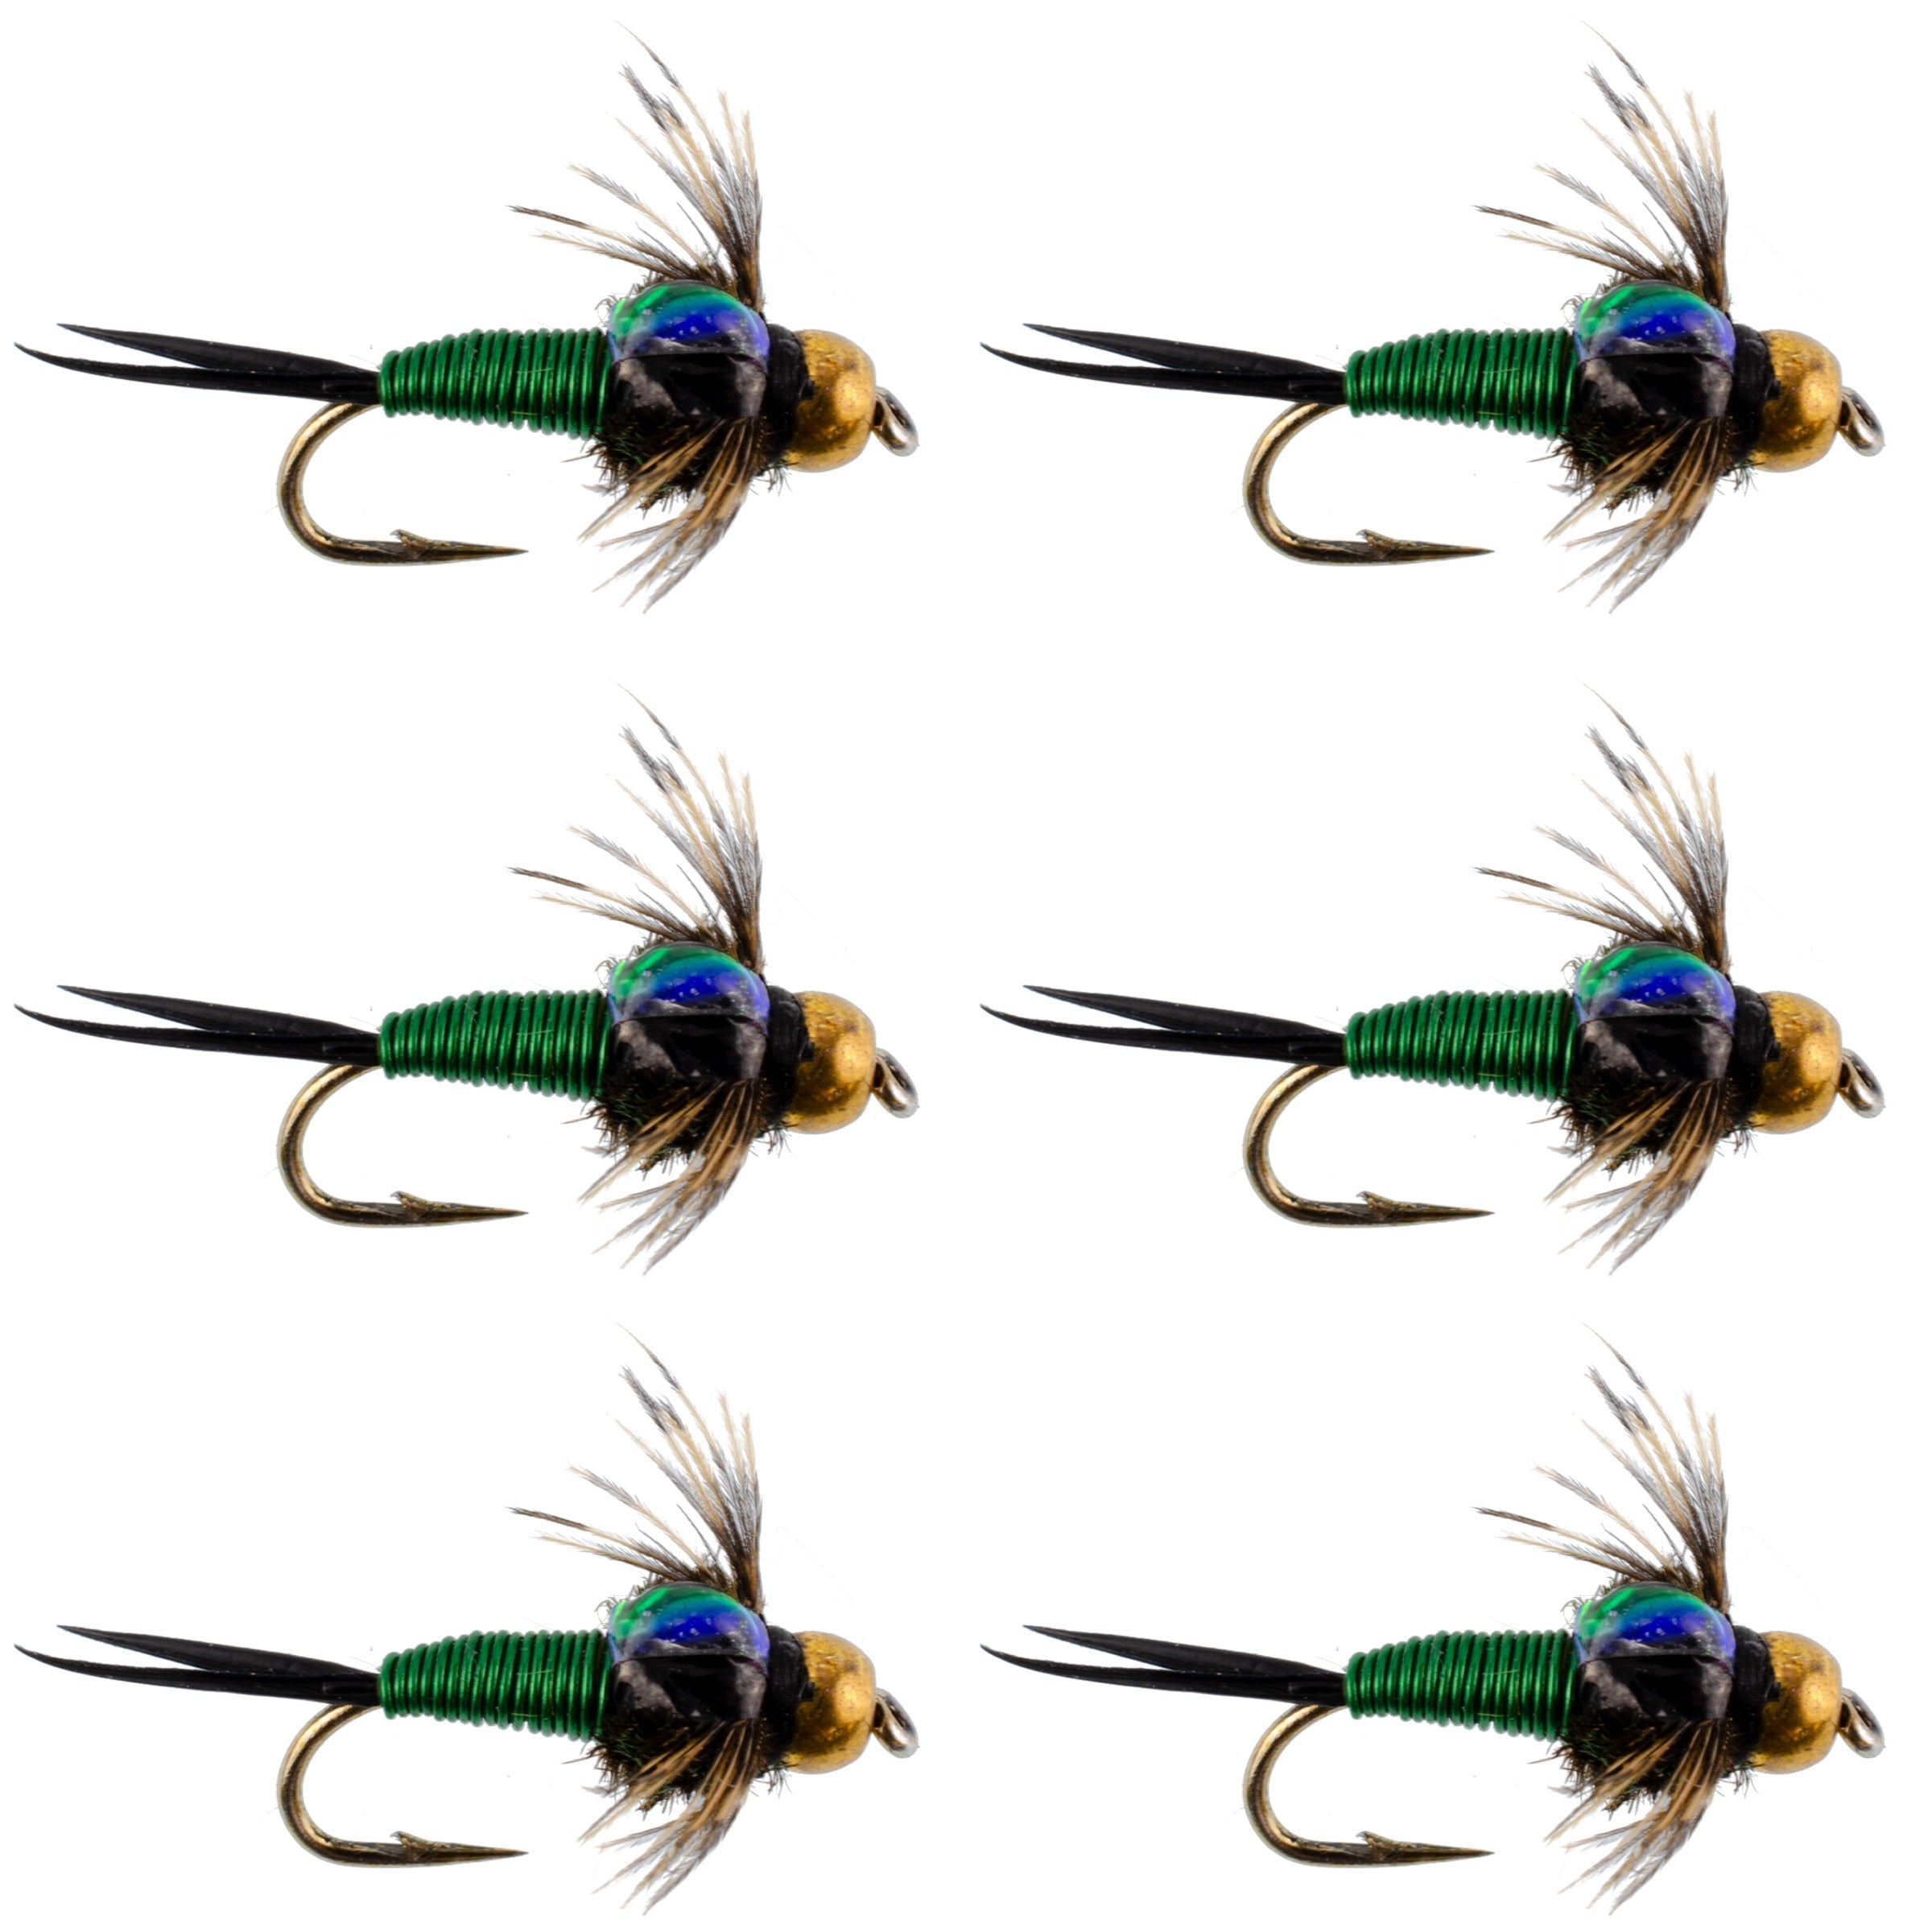 Moscas de pesca con mosca John Nymph de cobre verde con cabeza de cuentas, juego de 6 anzuelos para moscas, tamaño 12